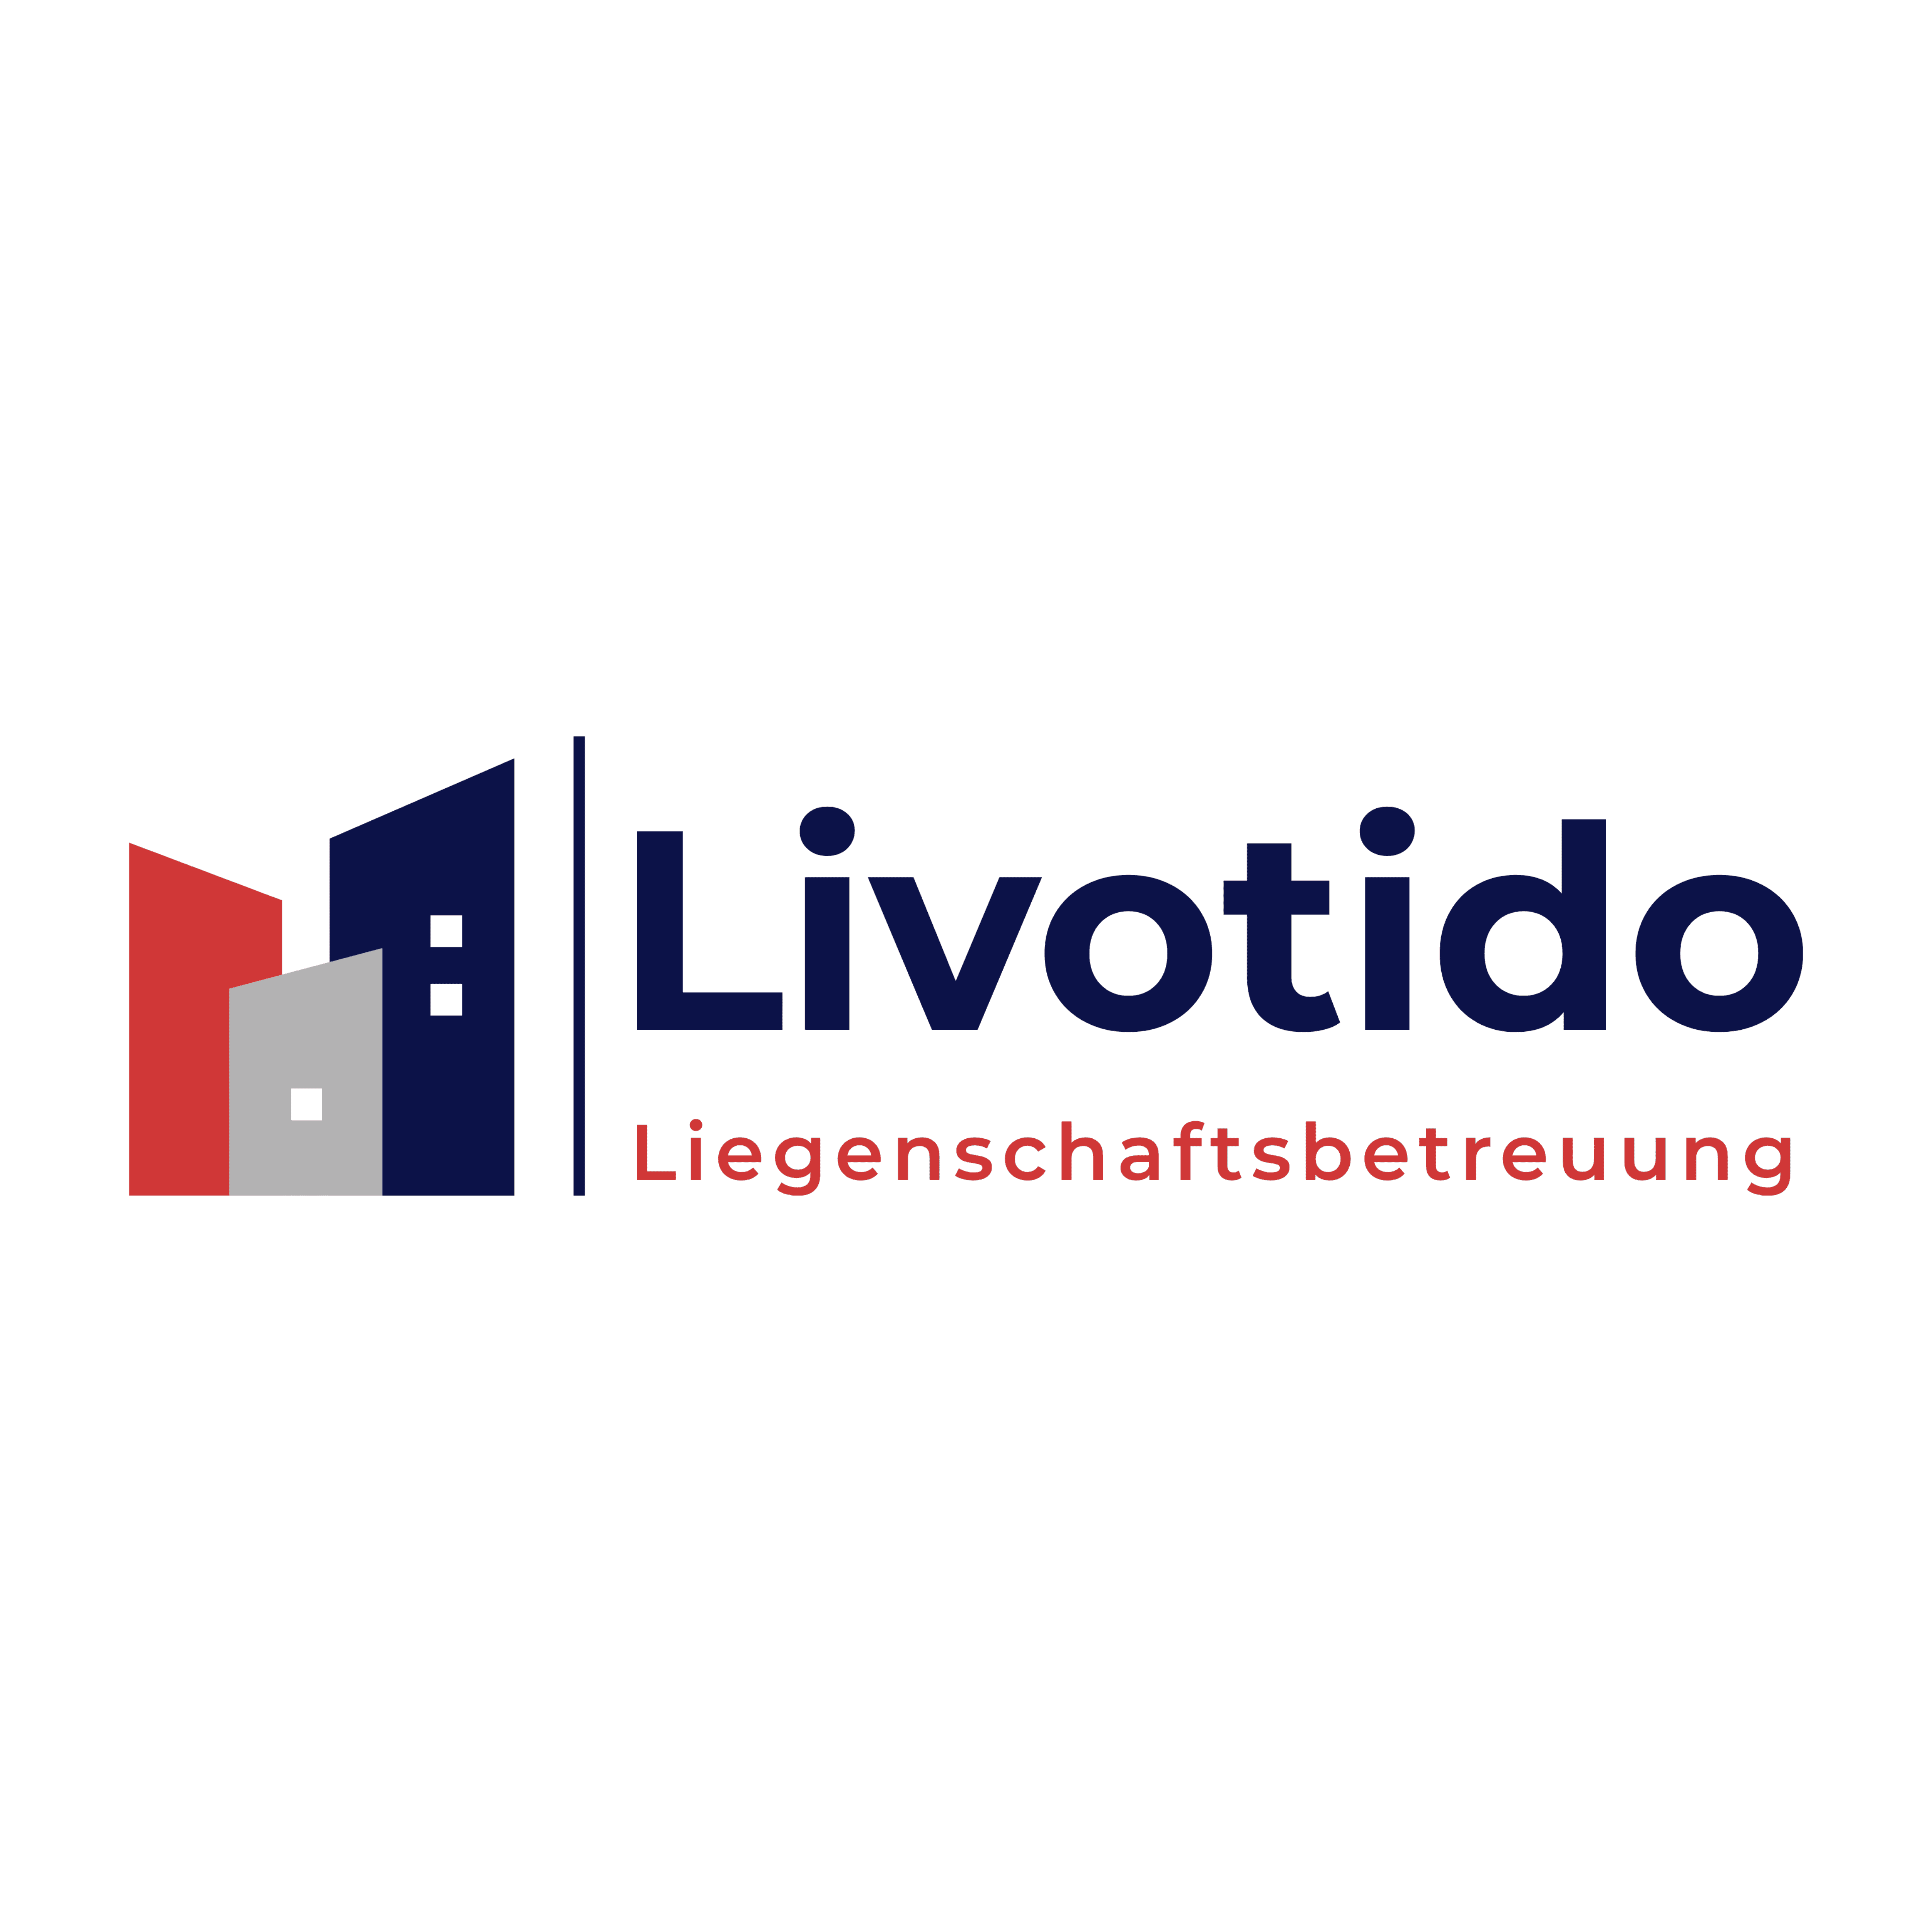 Livotido GmbH